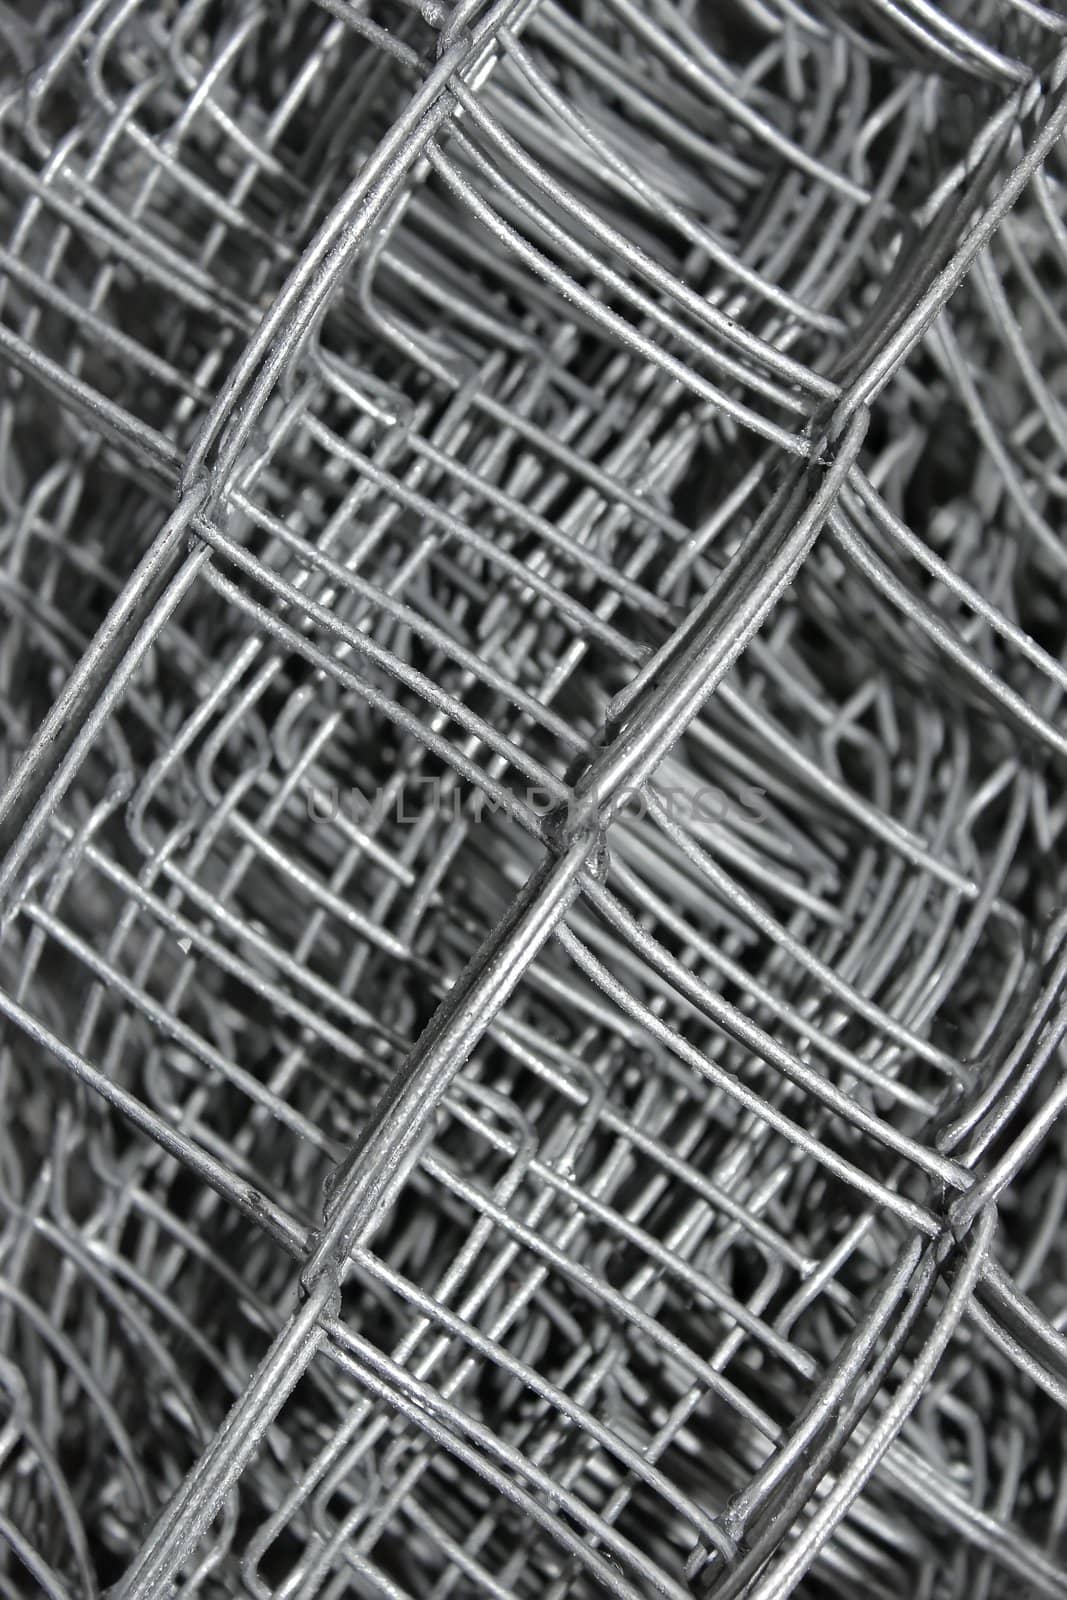 Steel mesh in multiple layers by qiiip